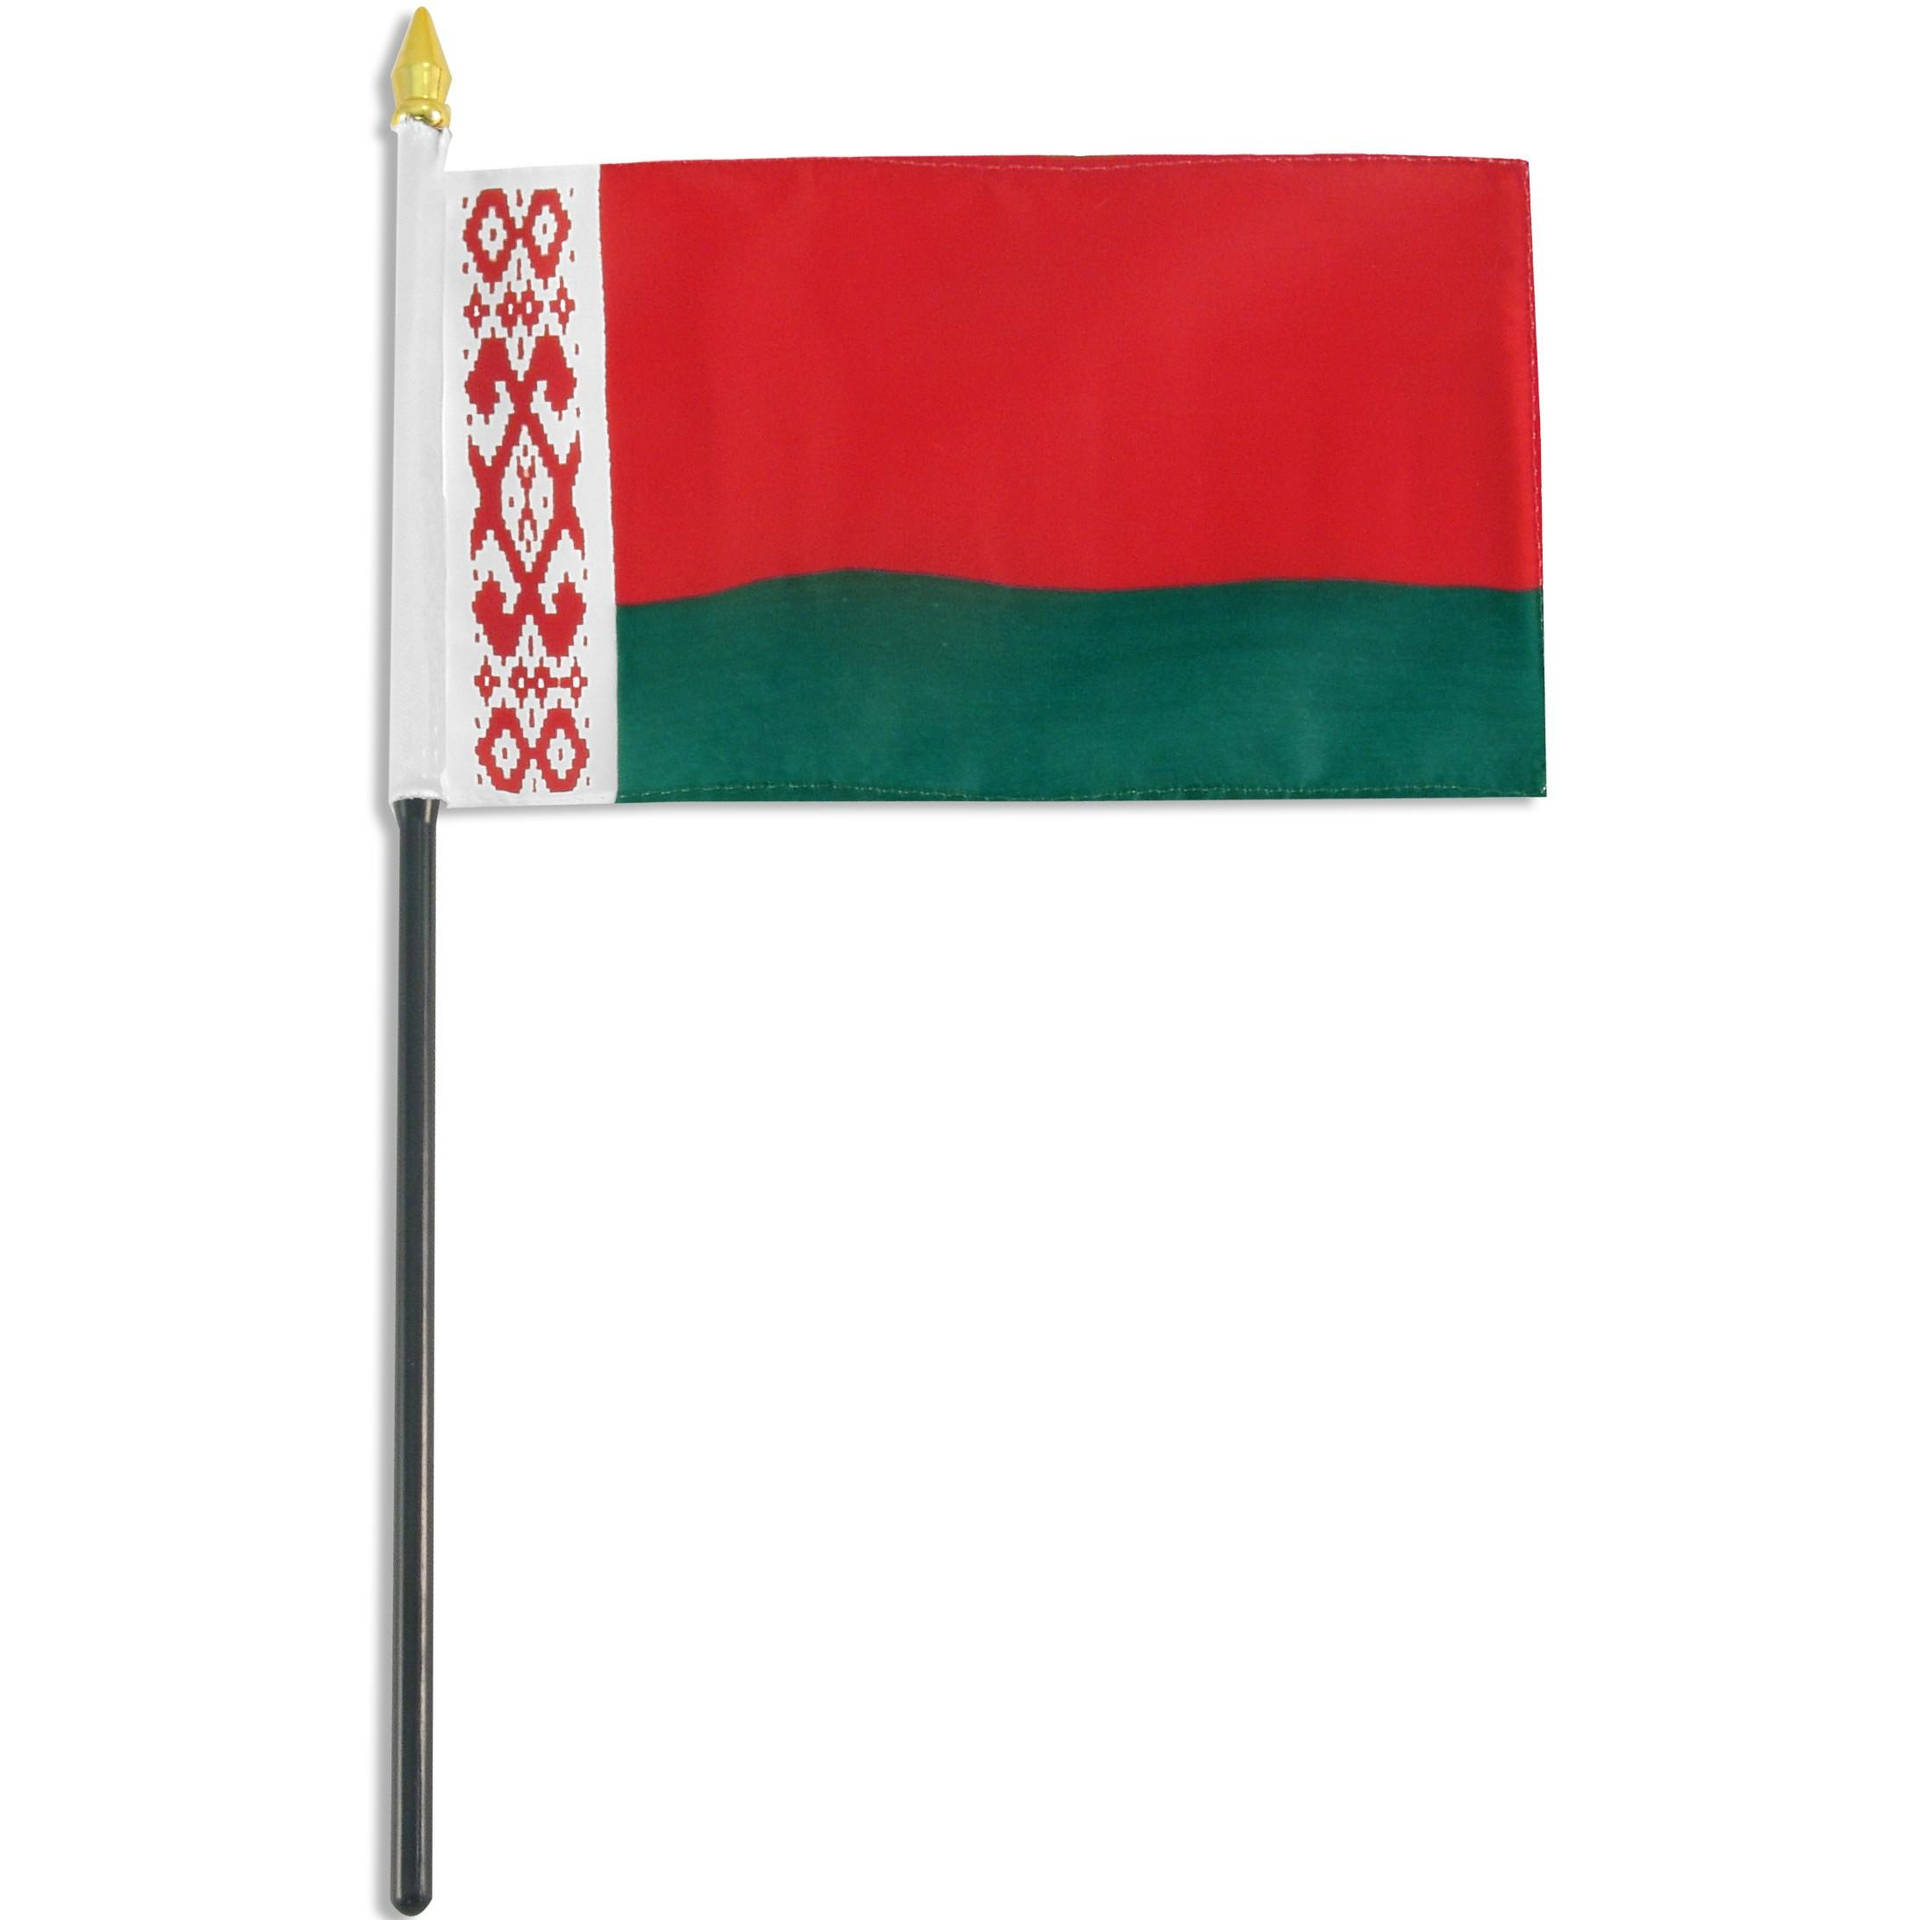 Belarus Flagpole Picture